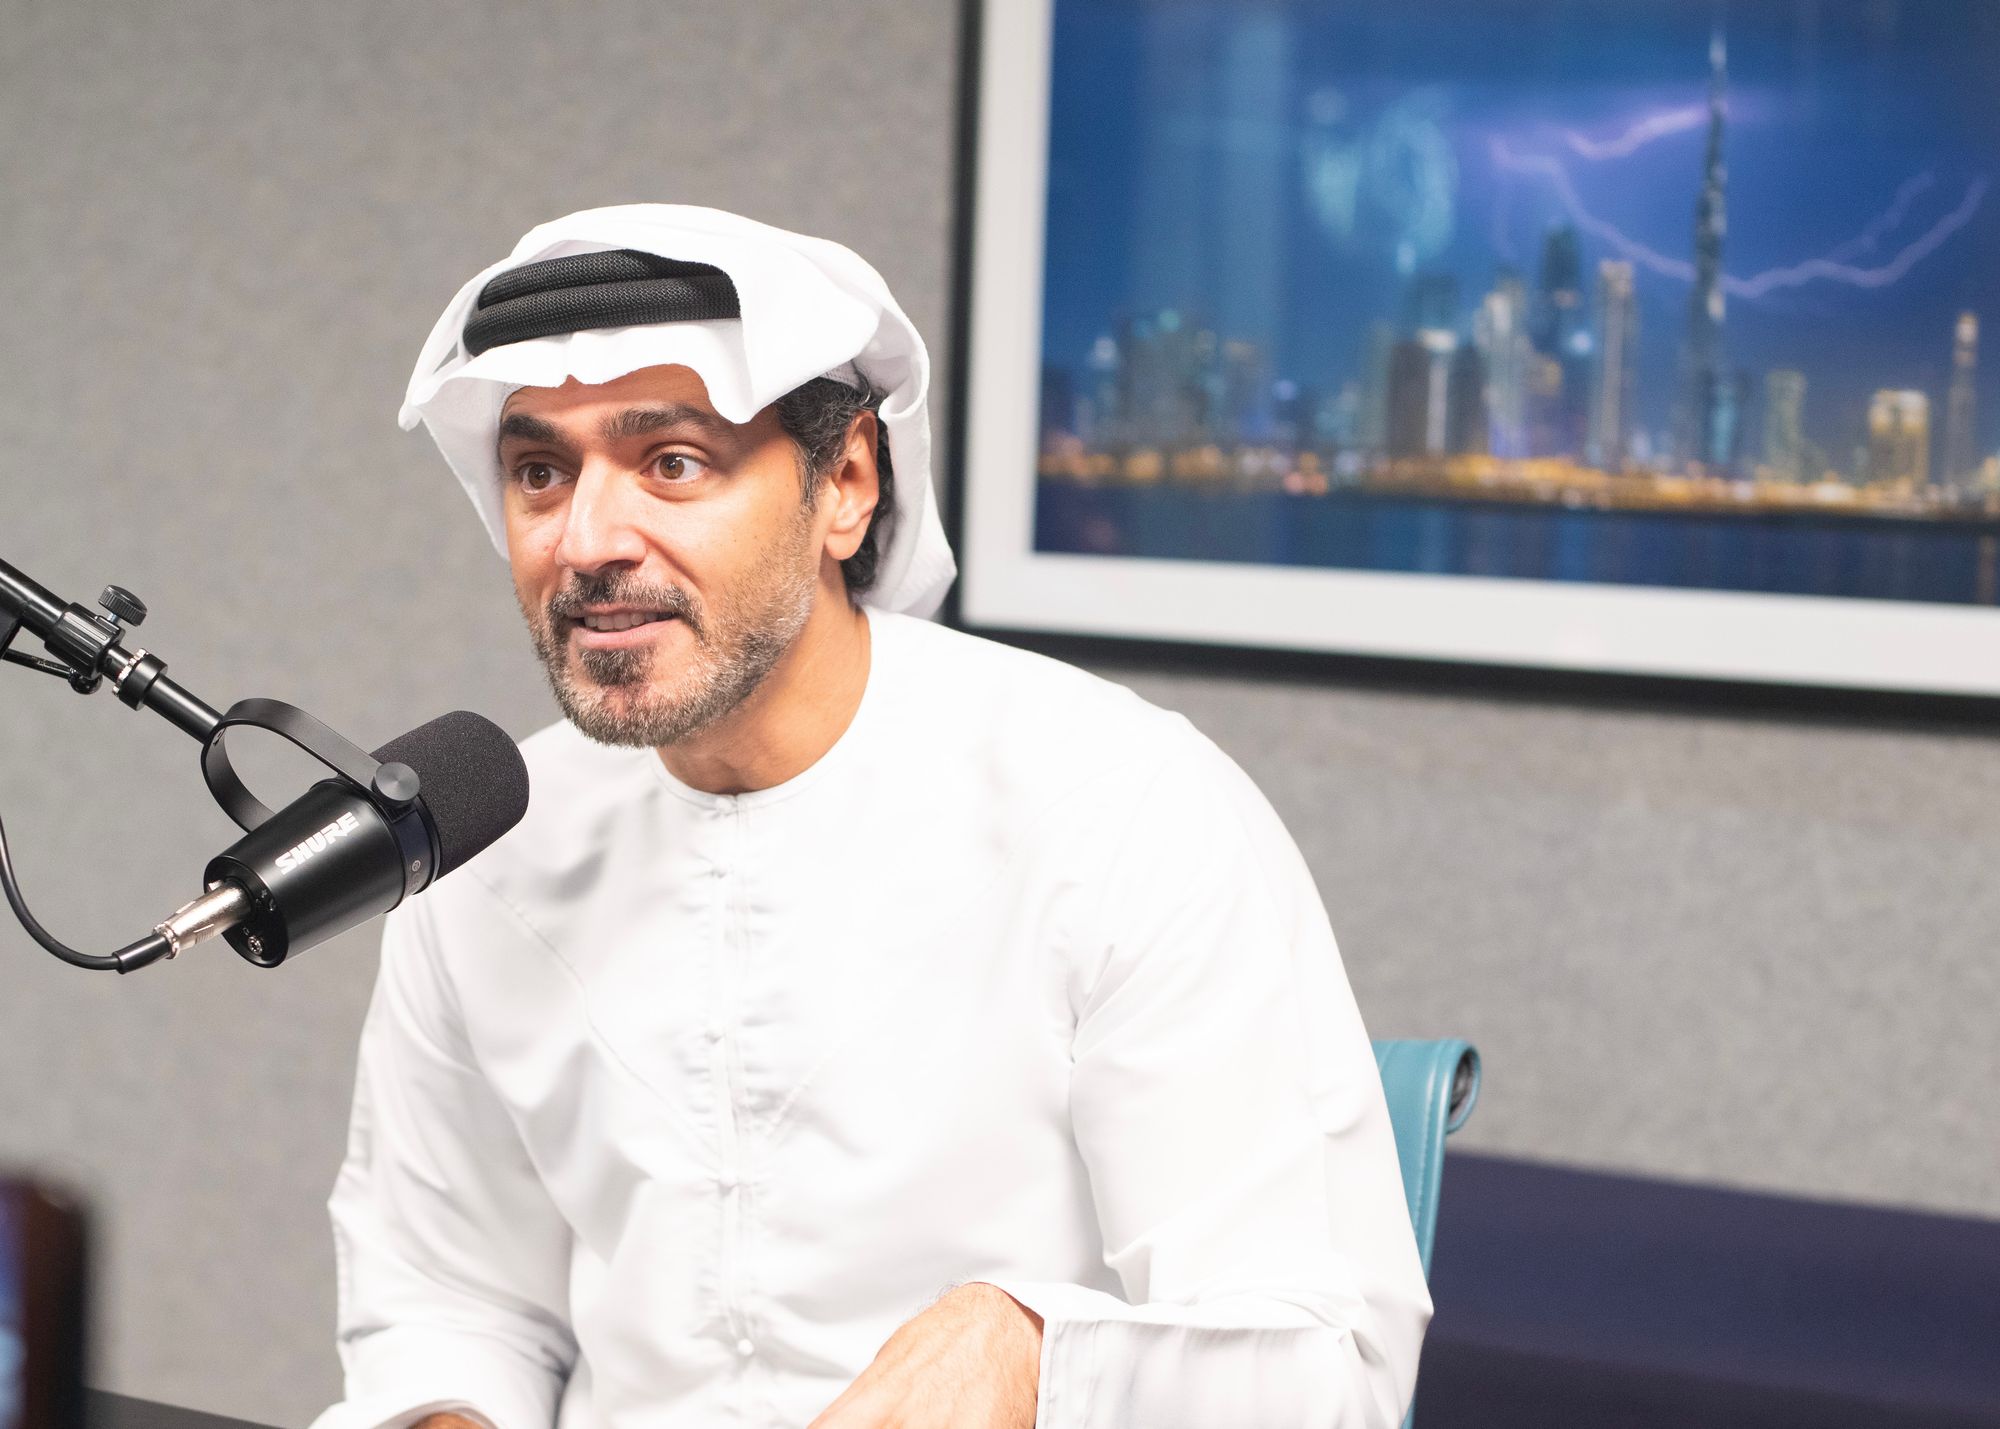 “Everyone has written off Dubai at one point.” Dubai Tourism CEO Issam Kazim on how Dubai bounced back post-pandemic